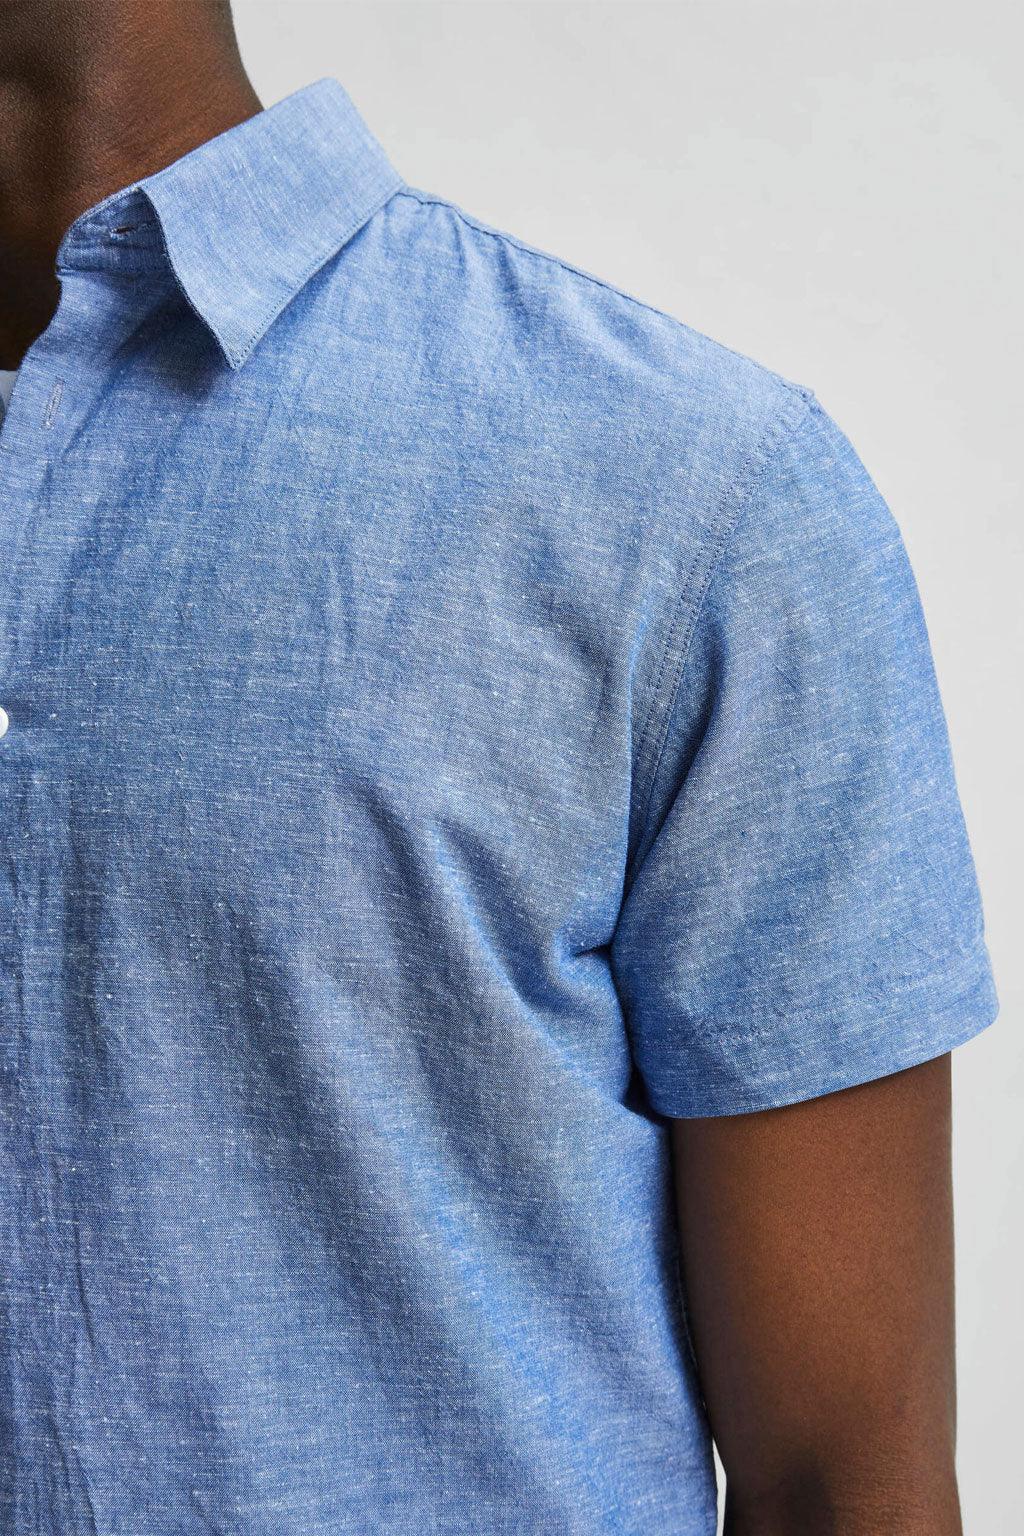 Selected overhemd korte mouw | Big Boss | the menswear concept